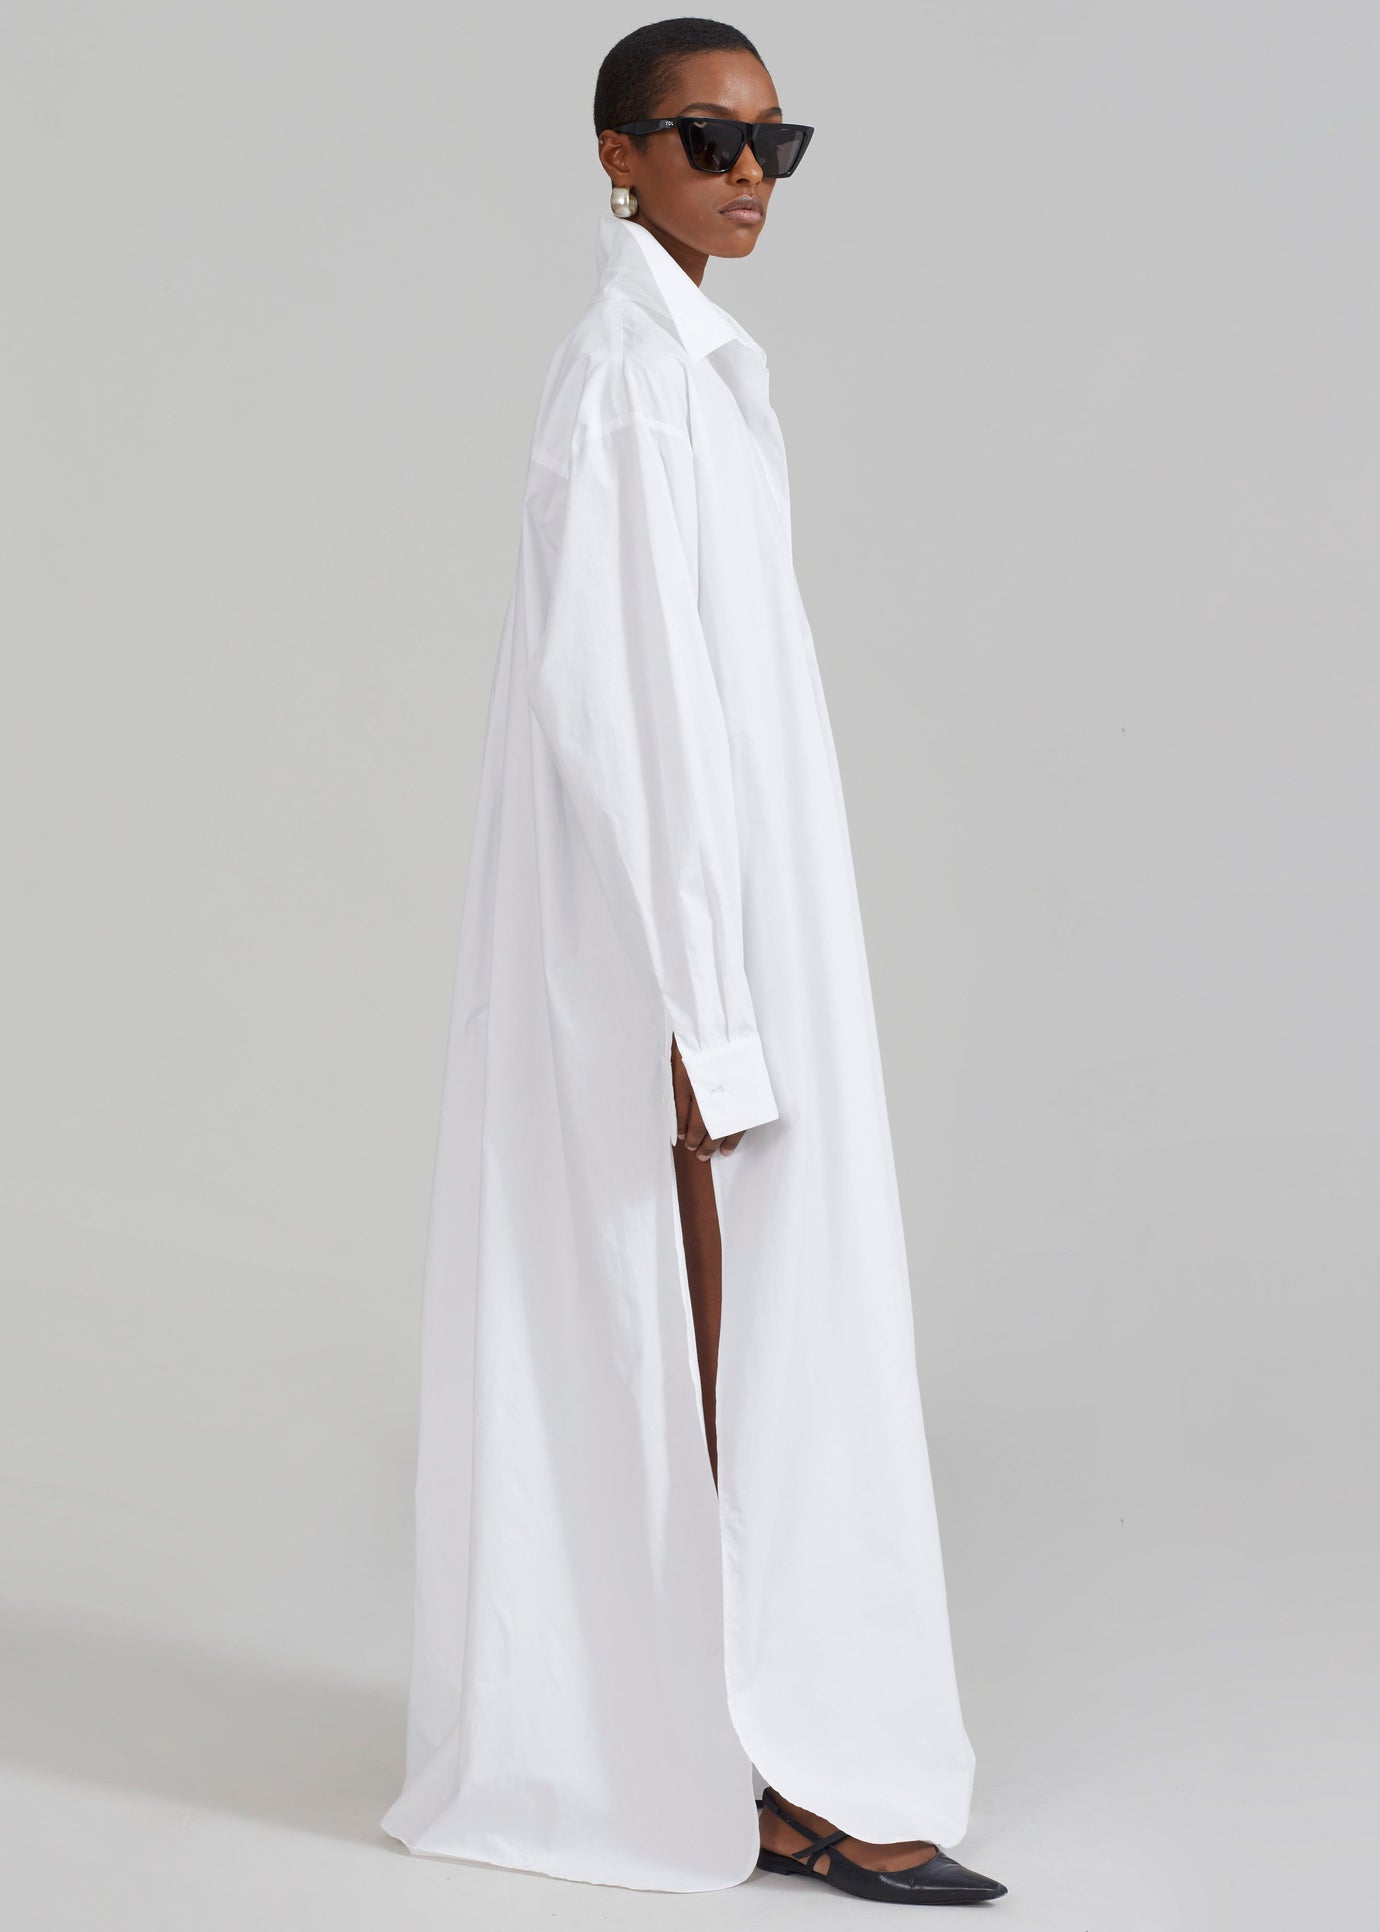 Avery Shirt Dress - White